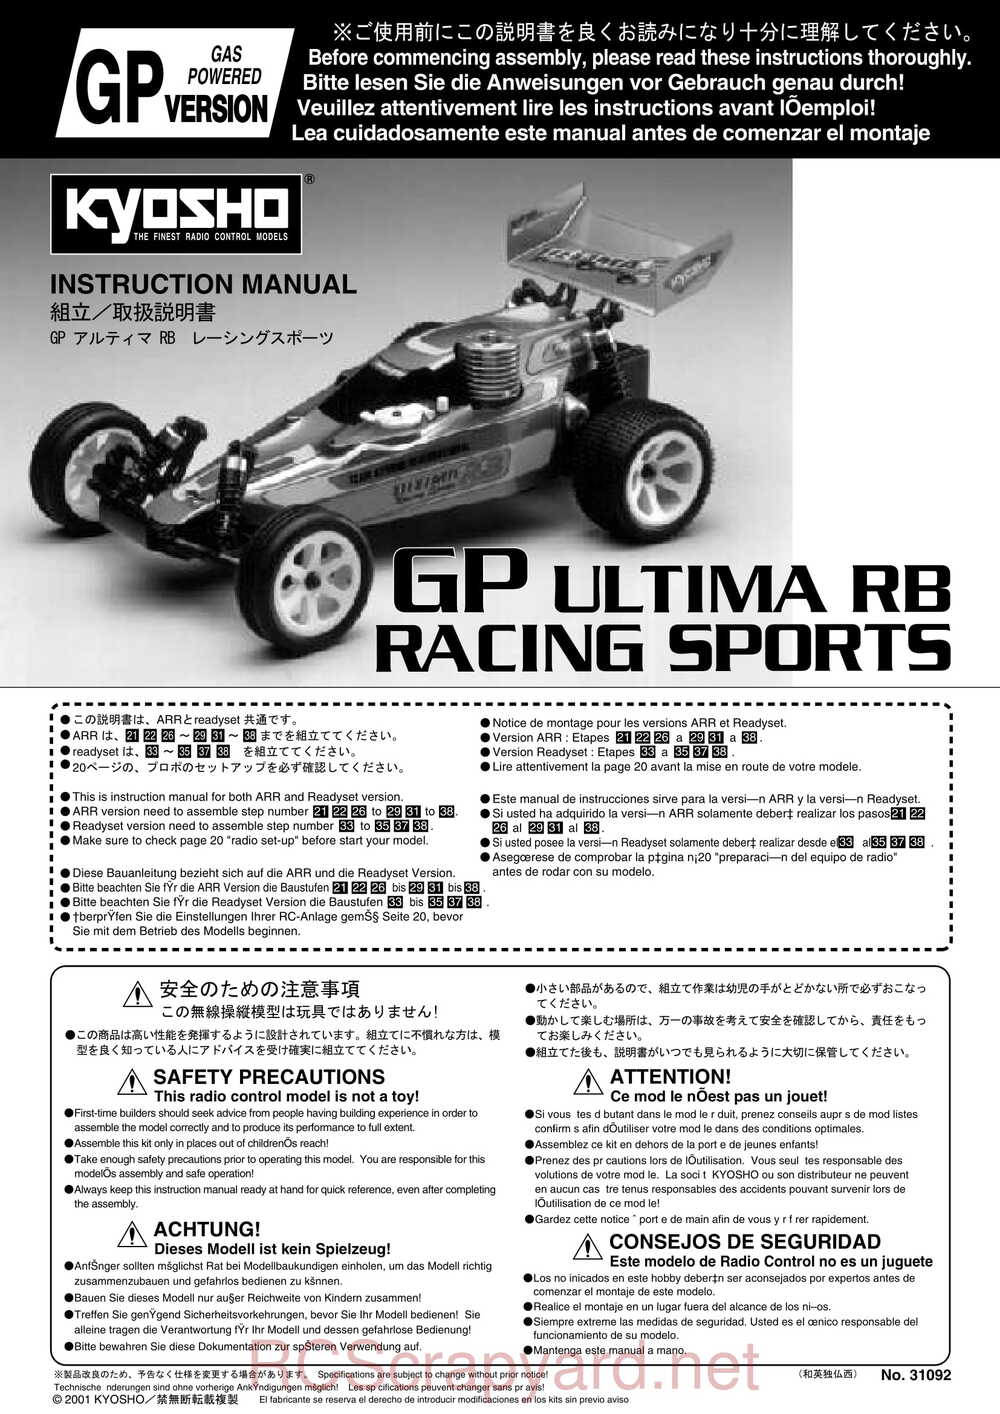 Kyosho - 31092 - GP Ultima RB Racing Sports - Manual - Page 01